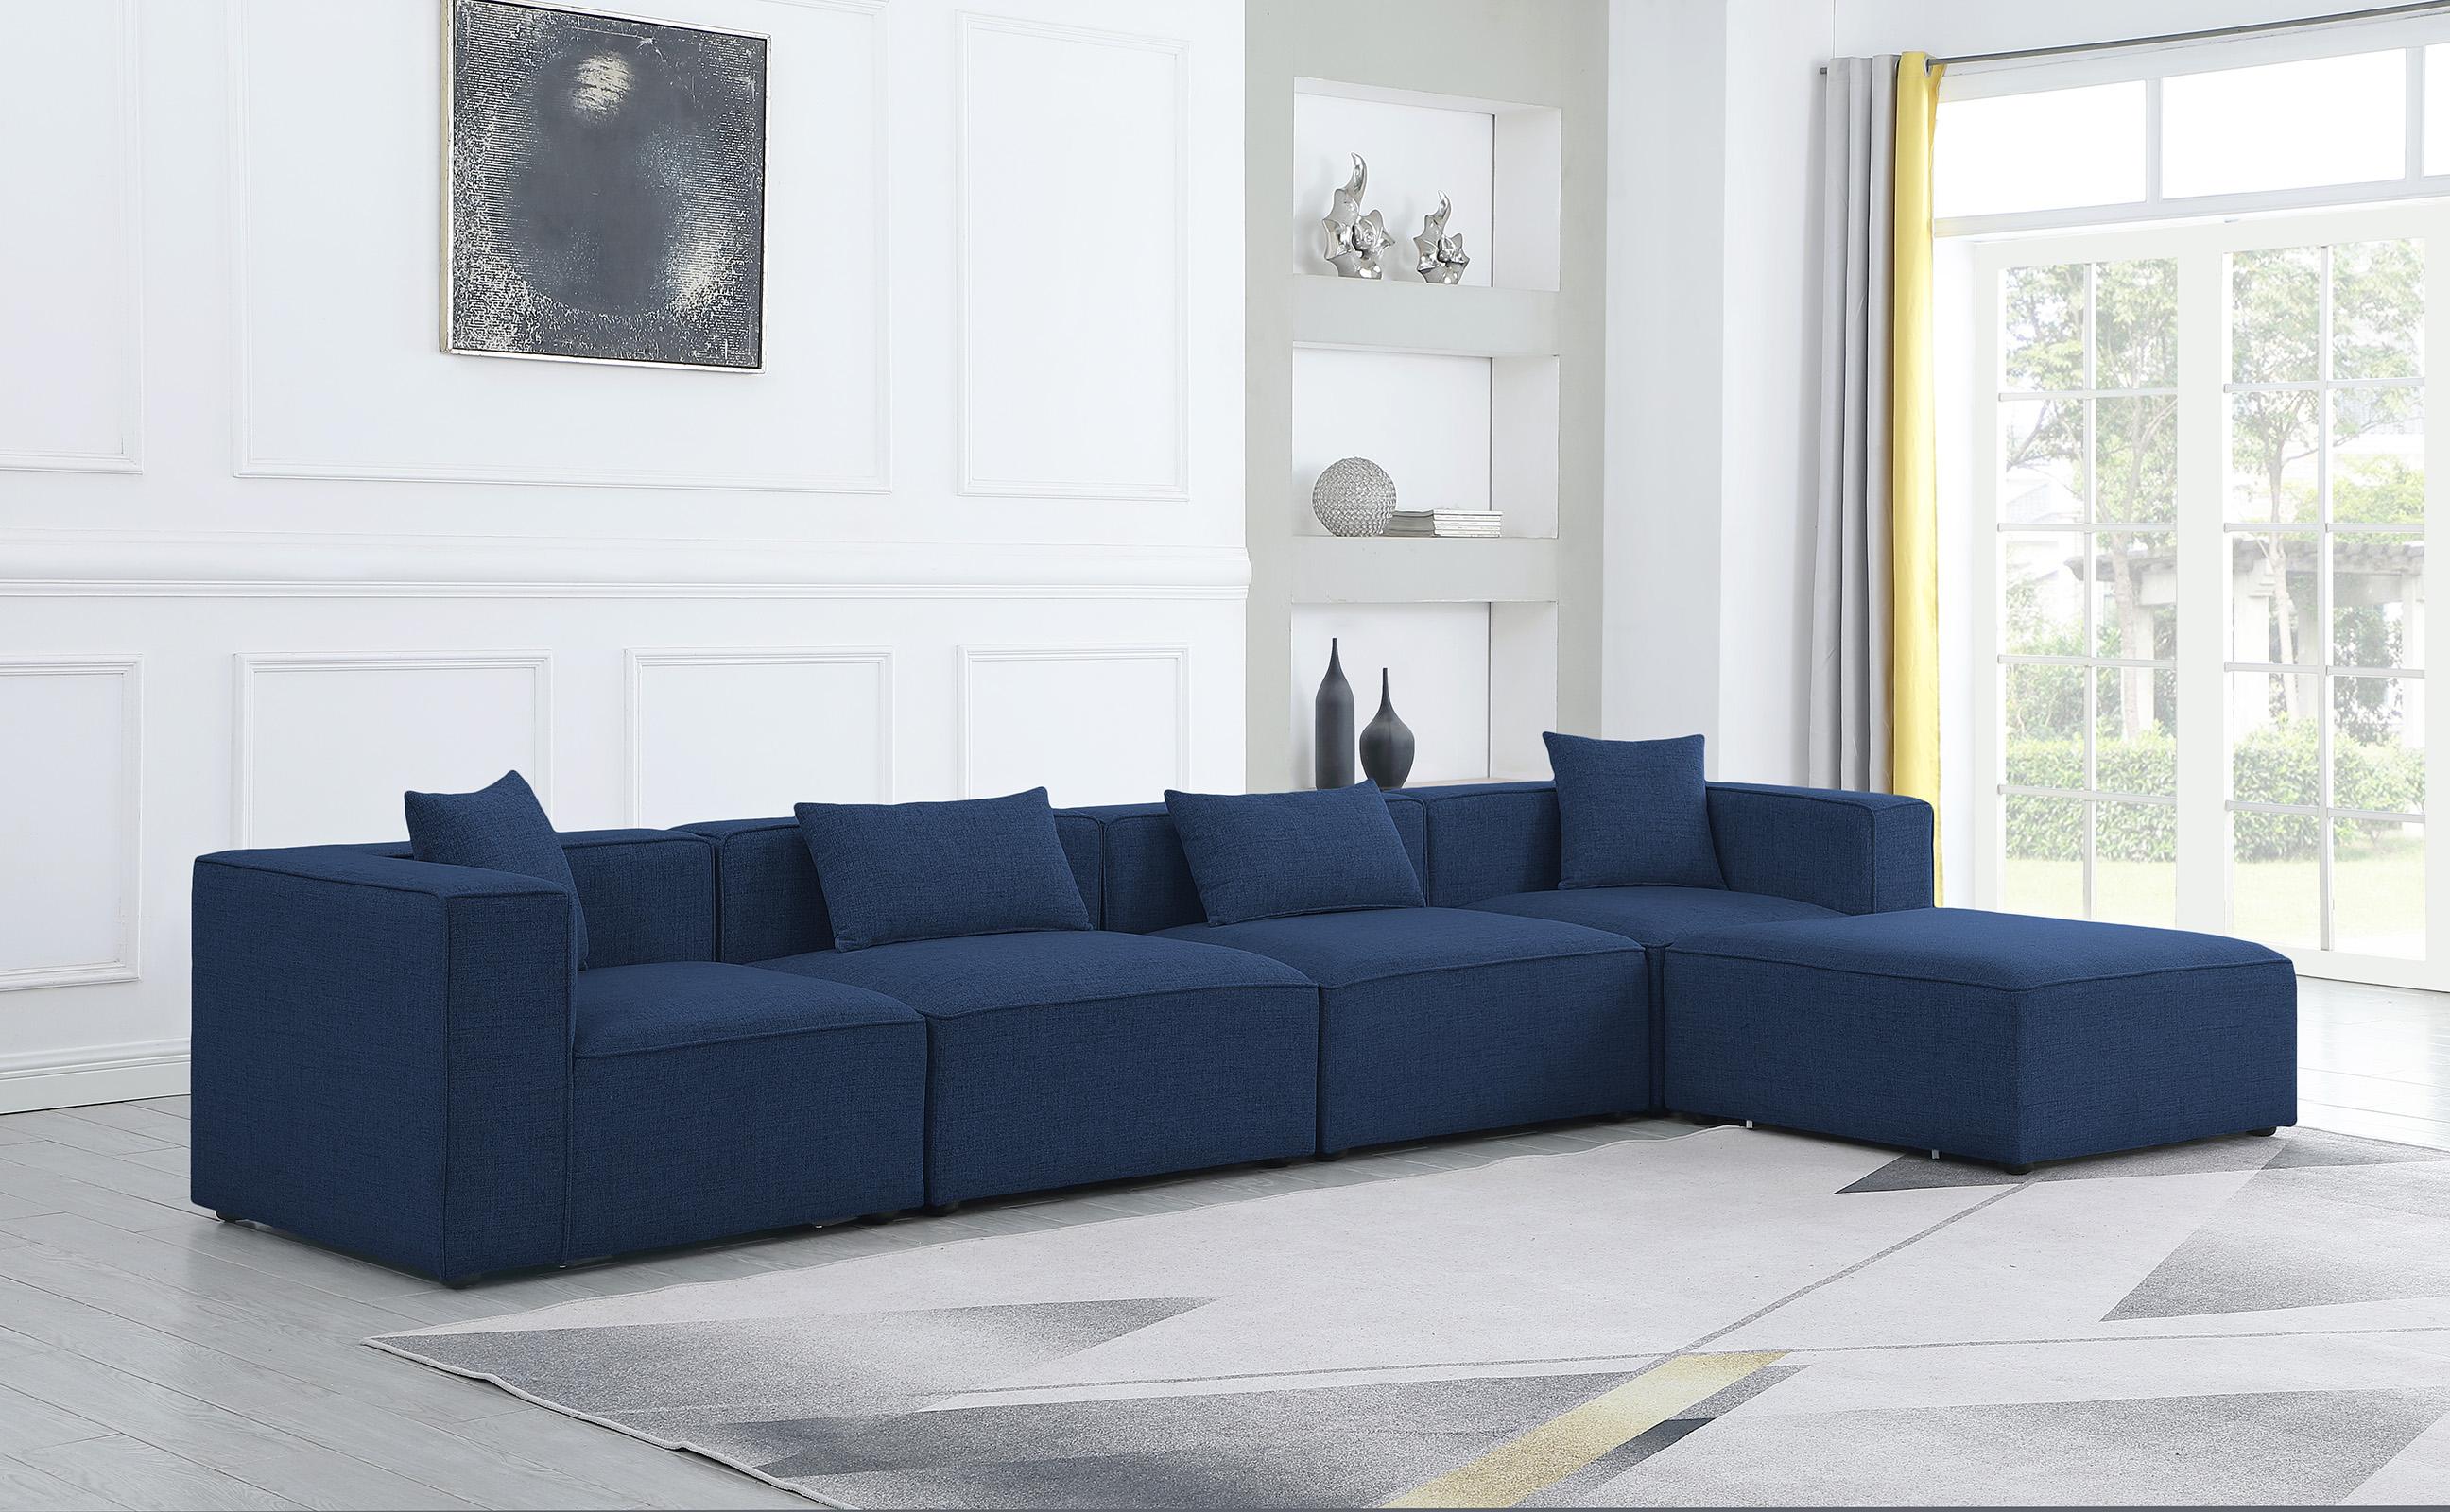 

    
Meridian Furniture CUBE 630Navy-Sec5A Modular Sectional Sofa Navy 630Navy-Sec5A
